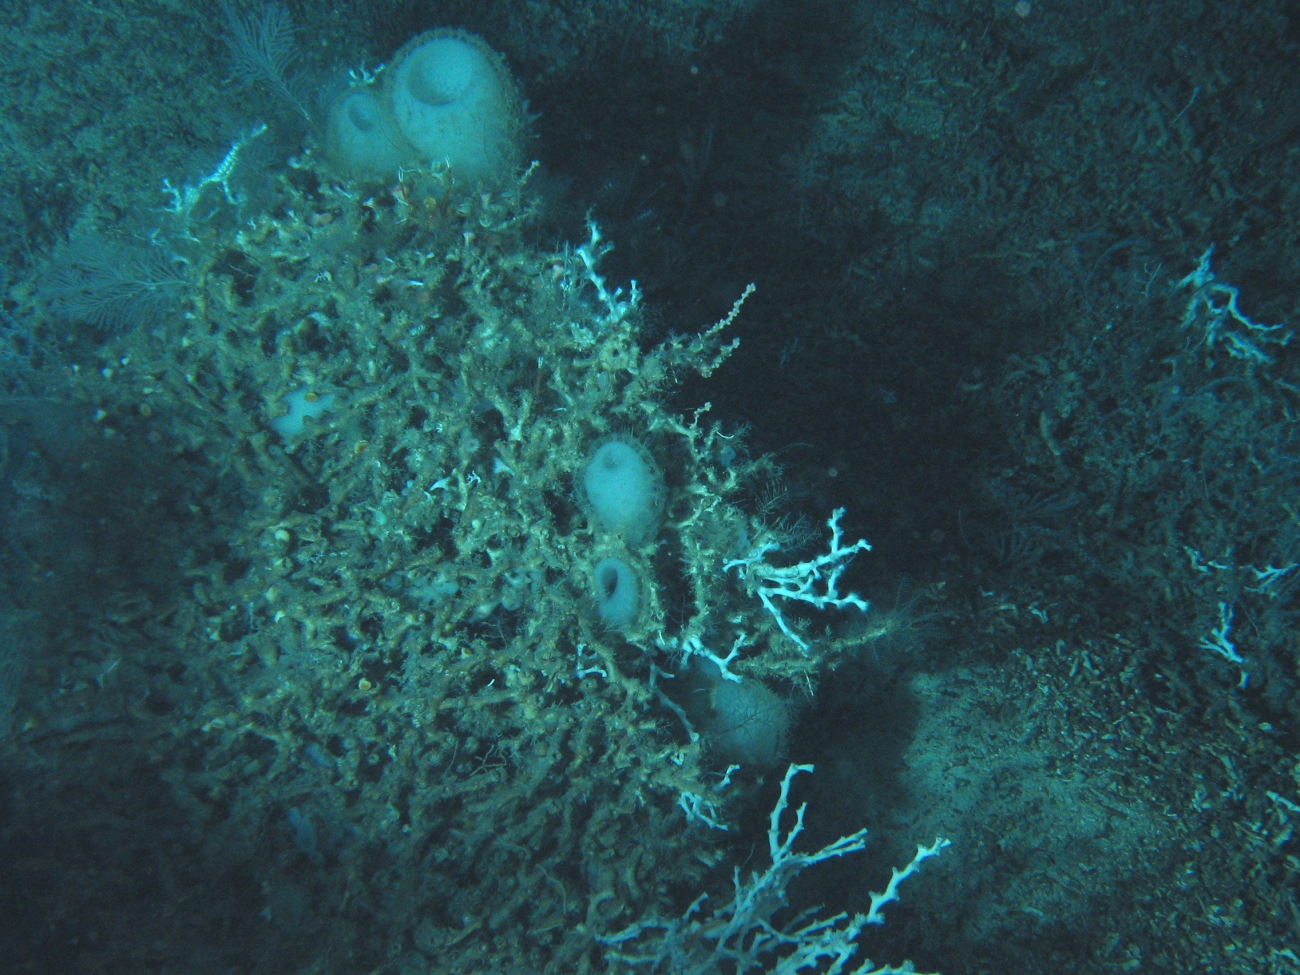 White sponges on lophelia coral bush